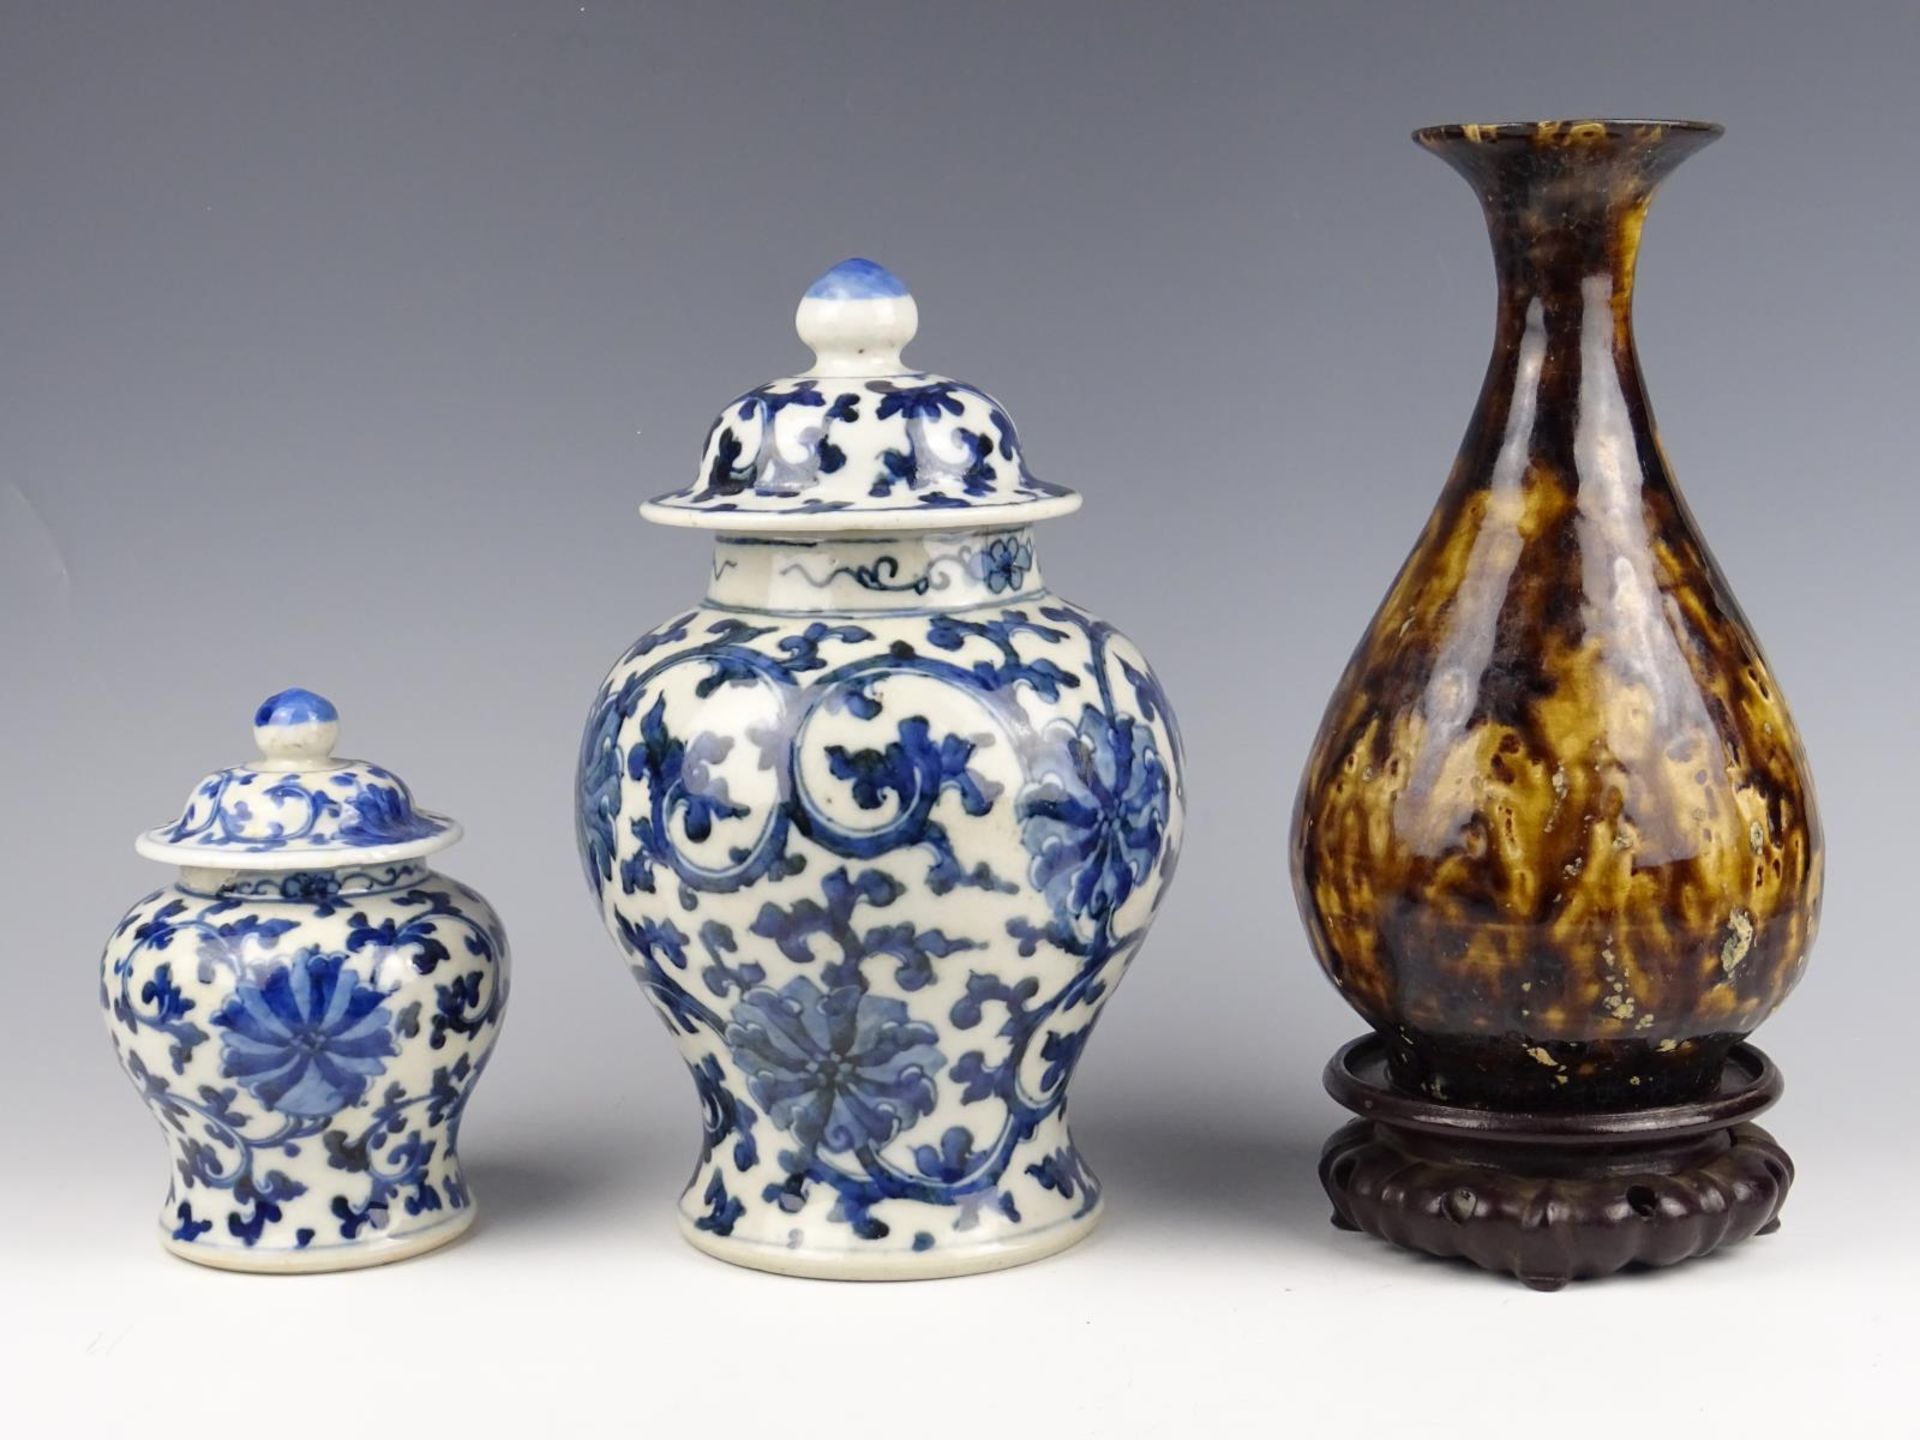 Three porcelain vases